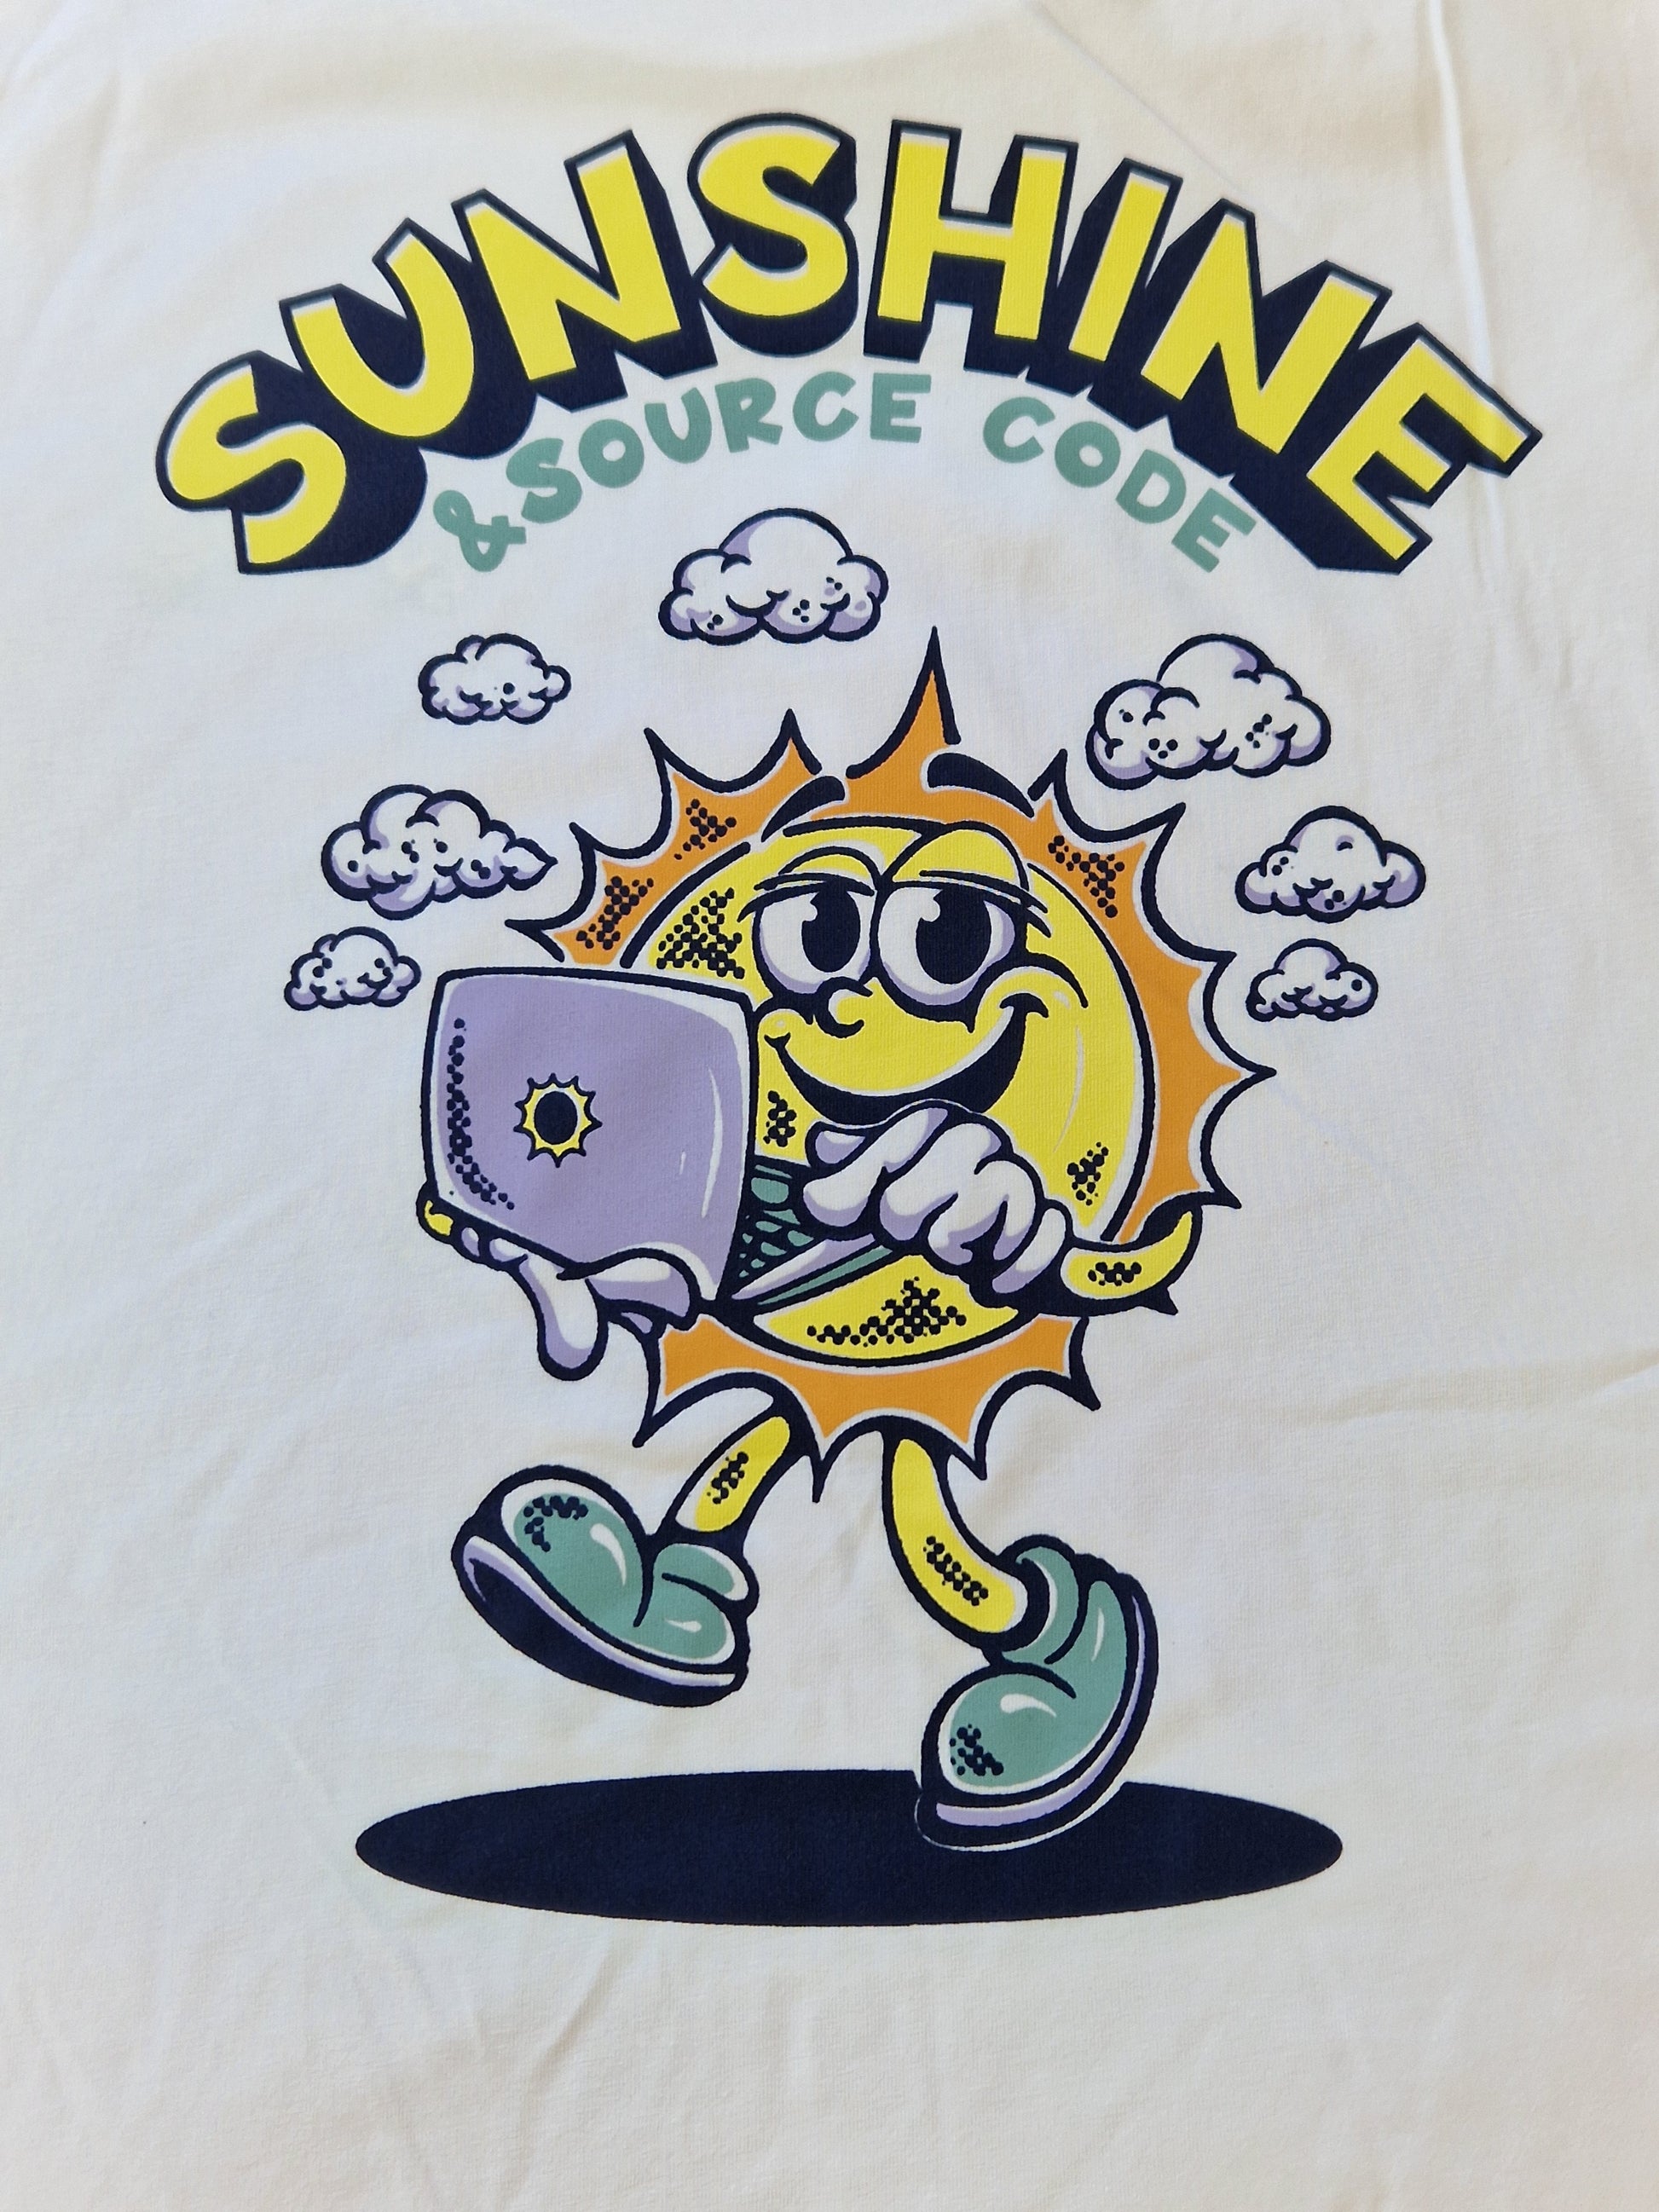 Programmer t-shirt print "Sunshine & Source Code"